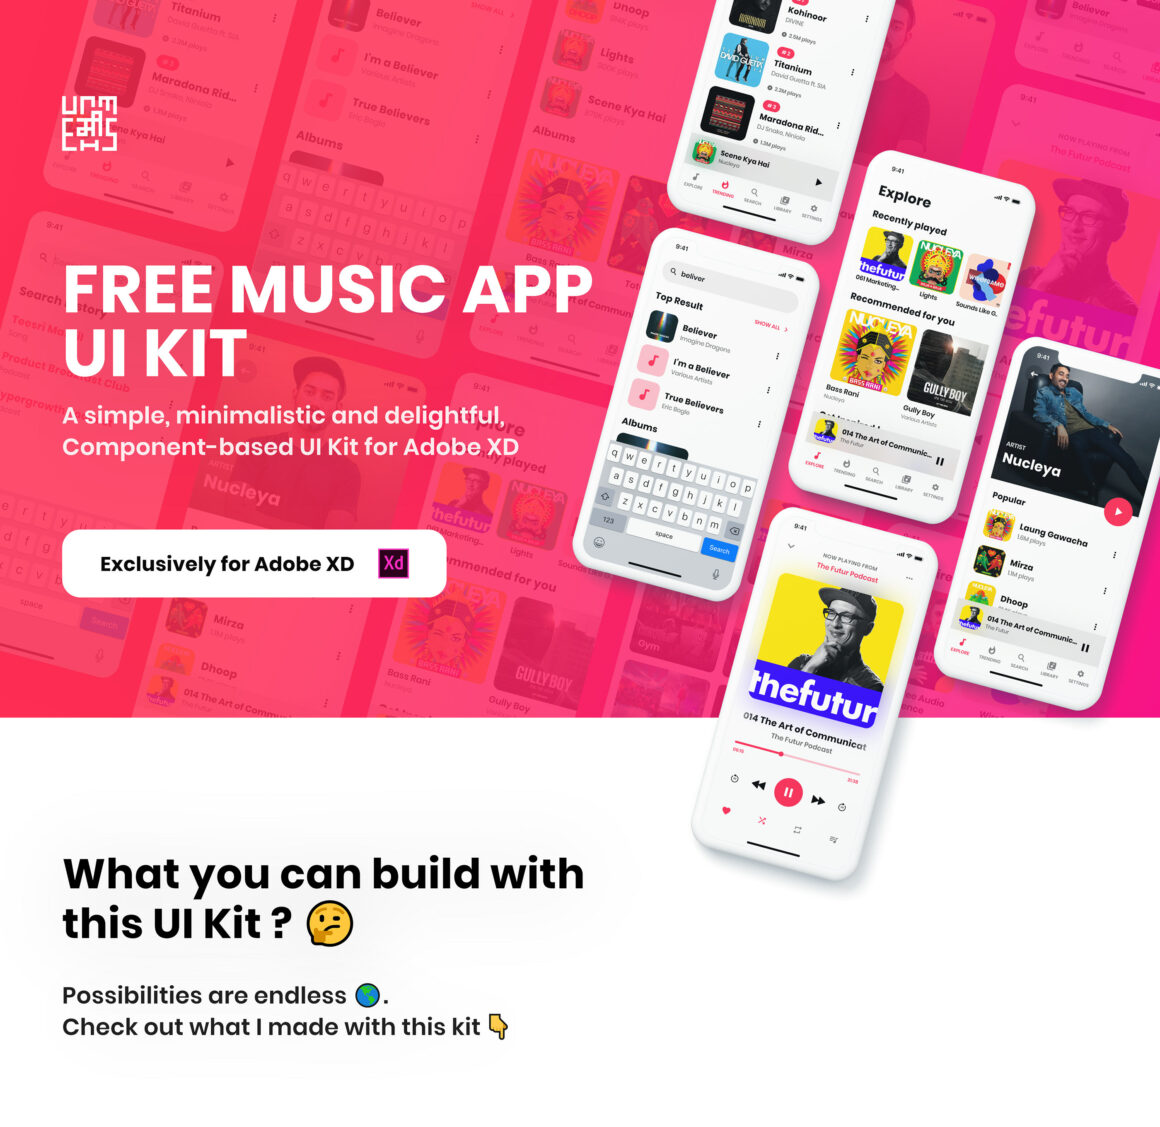 Free UI Kits for Web & Mobile App Designers